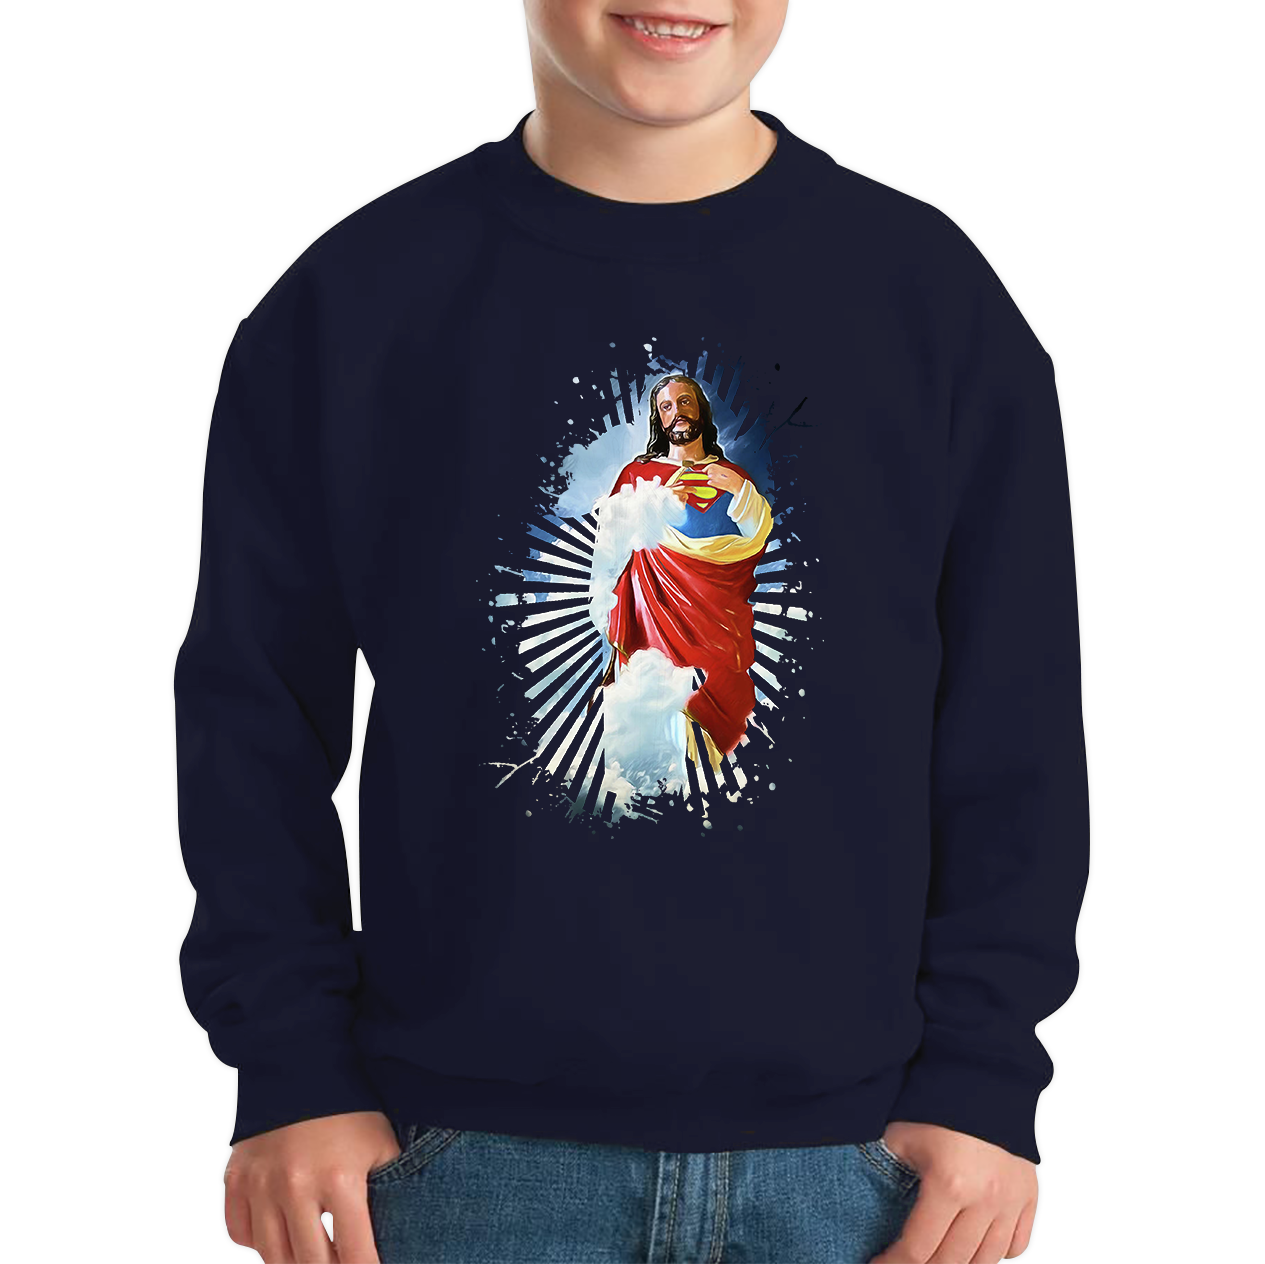 Jesus Christ Superman Jumper Superman Inspired Spoof Avengers Superhero Christian Gift Kids Sweatshirt